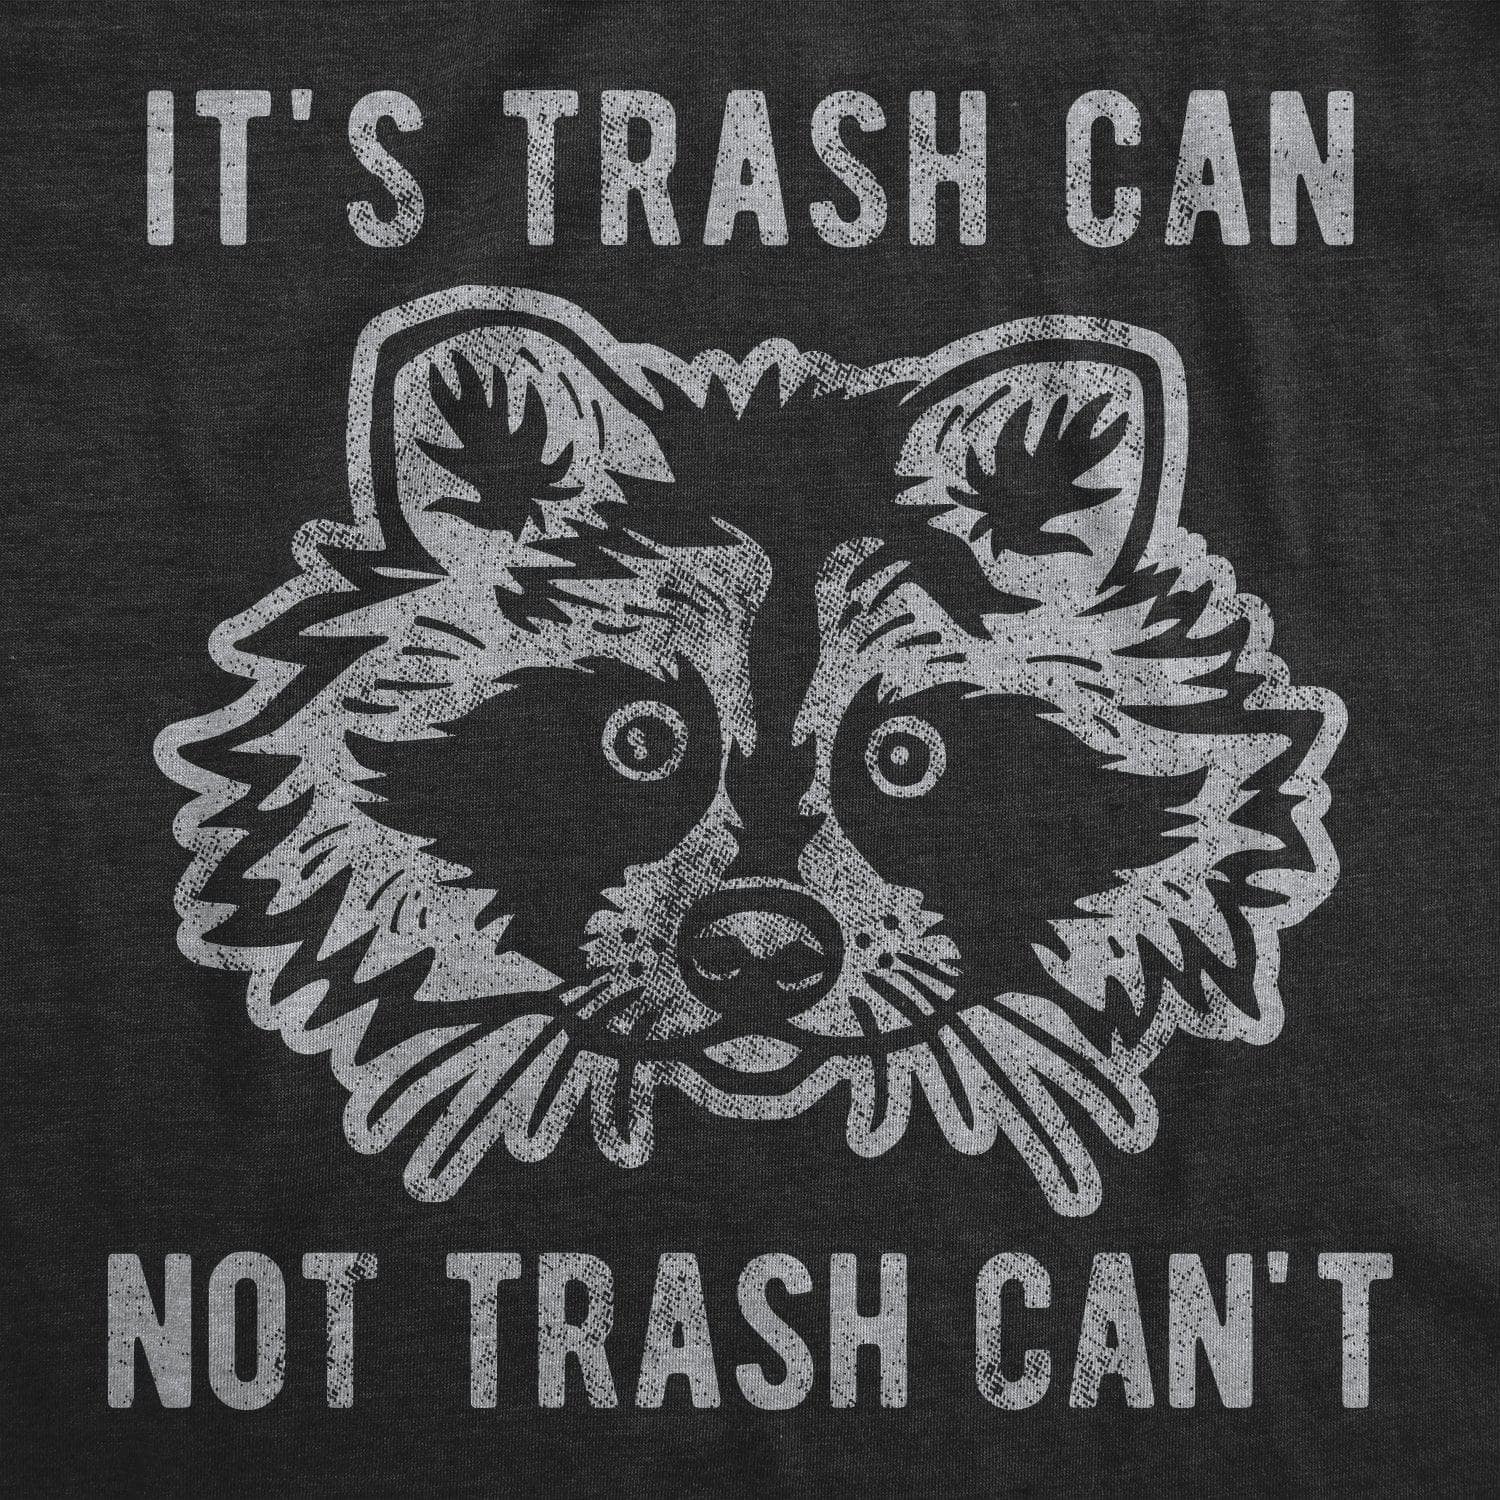 It's Trash Can Not Trash Can't Women's Tshirt  -  Crazy Dog T-Shirts